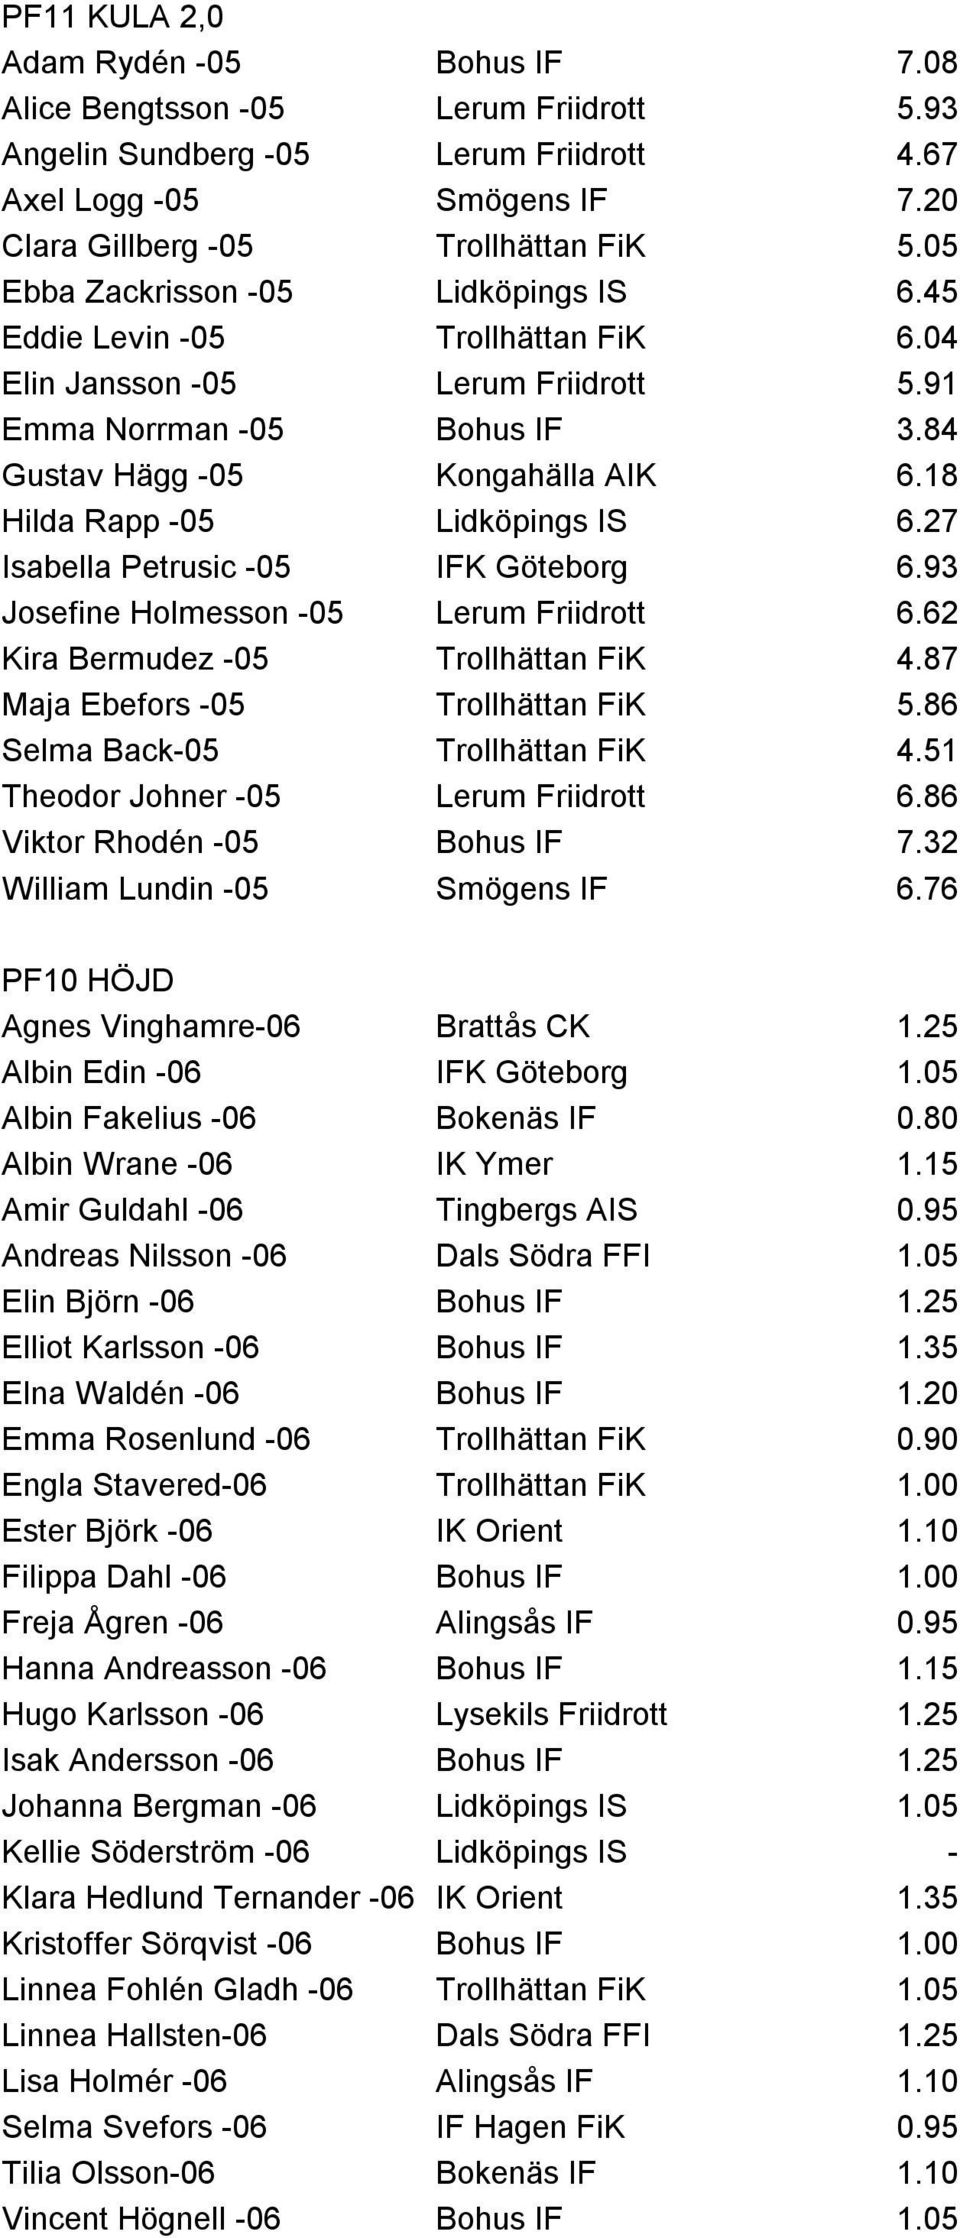 18 Hilda Rapp -05 Lidköpings IS 6.27 Isabella Petrusic -05 IFK Göteborg 6.93 Josefine Holmesson -05 Lerum Friidrott 6.62 Kira Bermudez -05 Trollhättan FiK 4.87 Maja Ebefors -05 Trollhättan FiK 5.